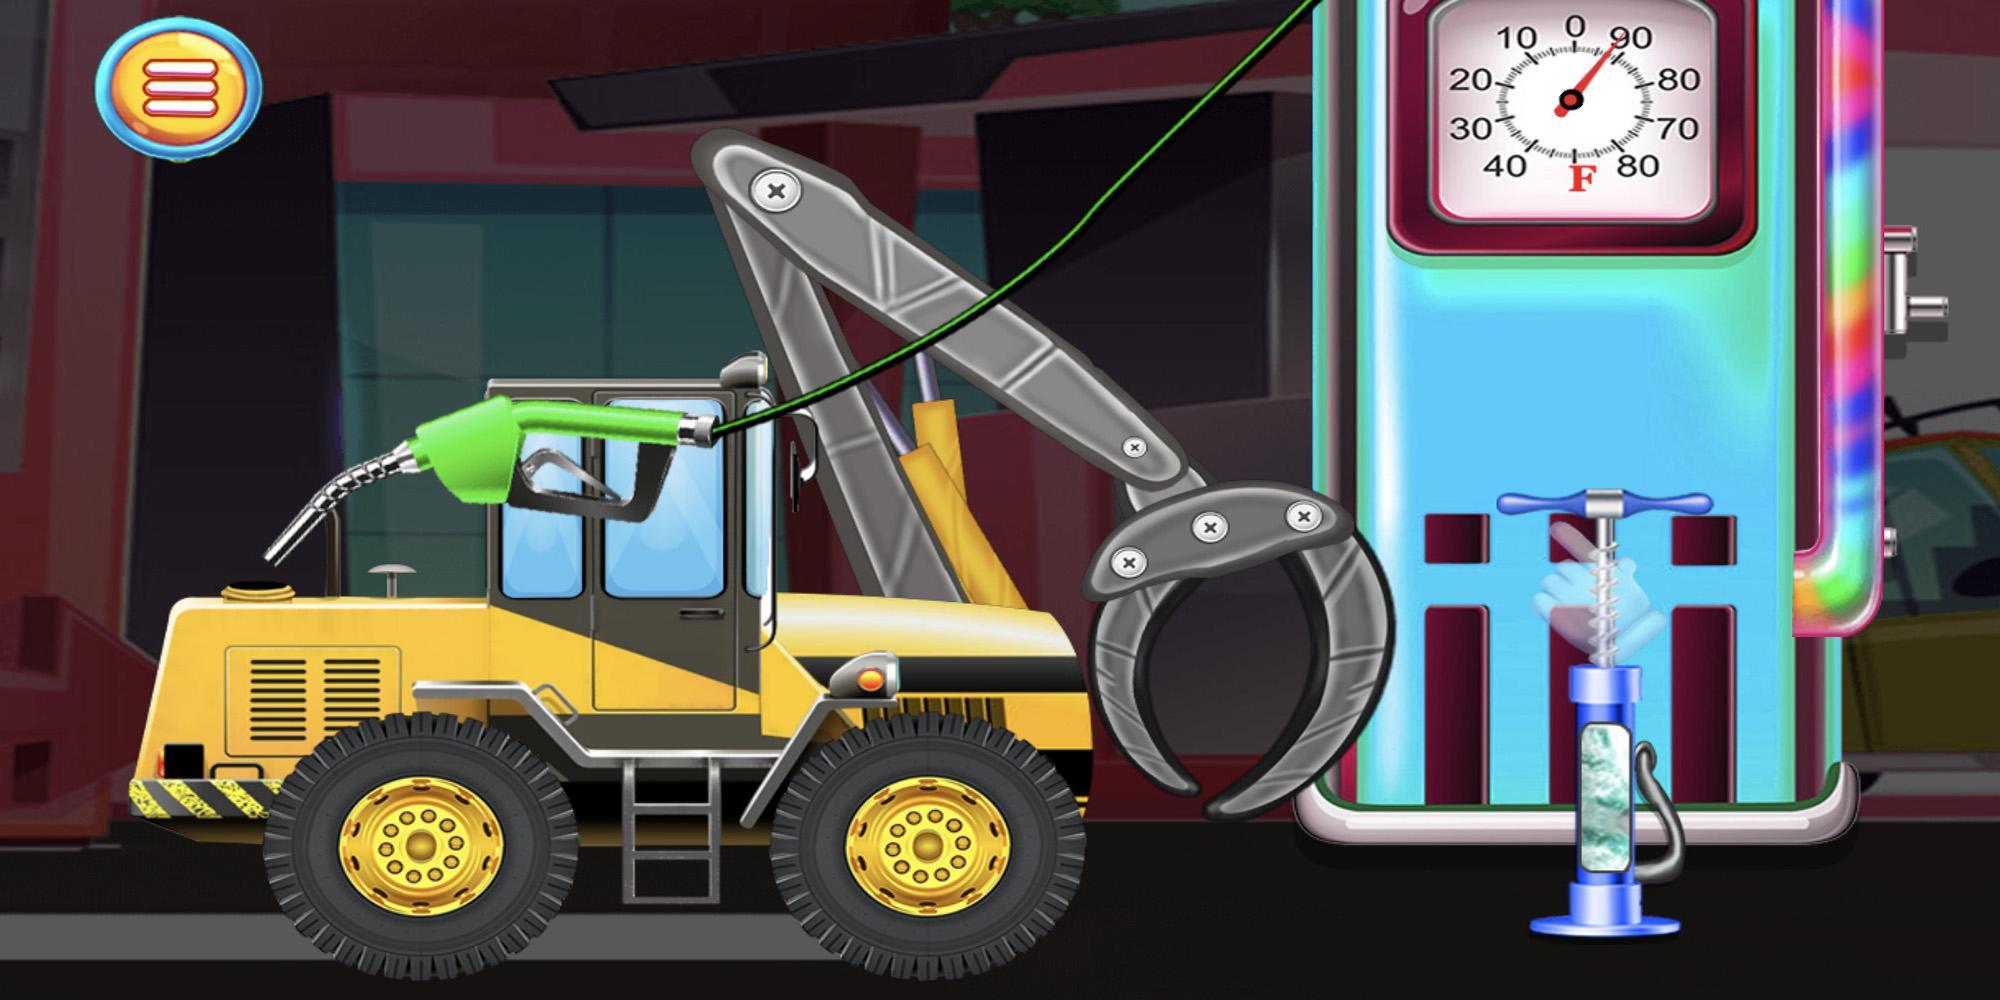 Construction Vehicles & Trucks - Games for Kids 1.9.0 Screenshot 4